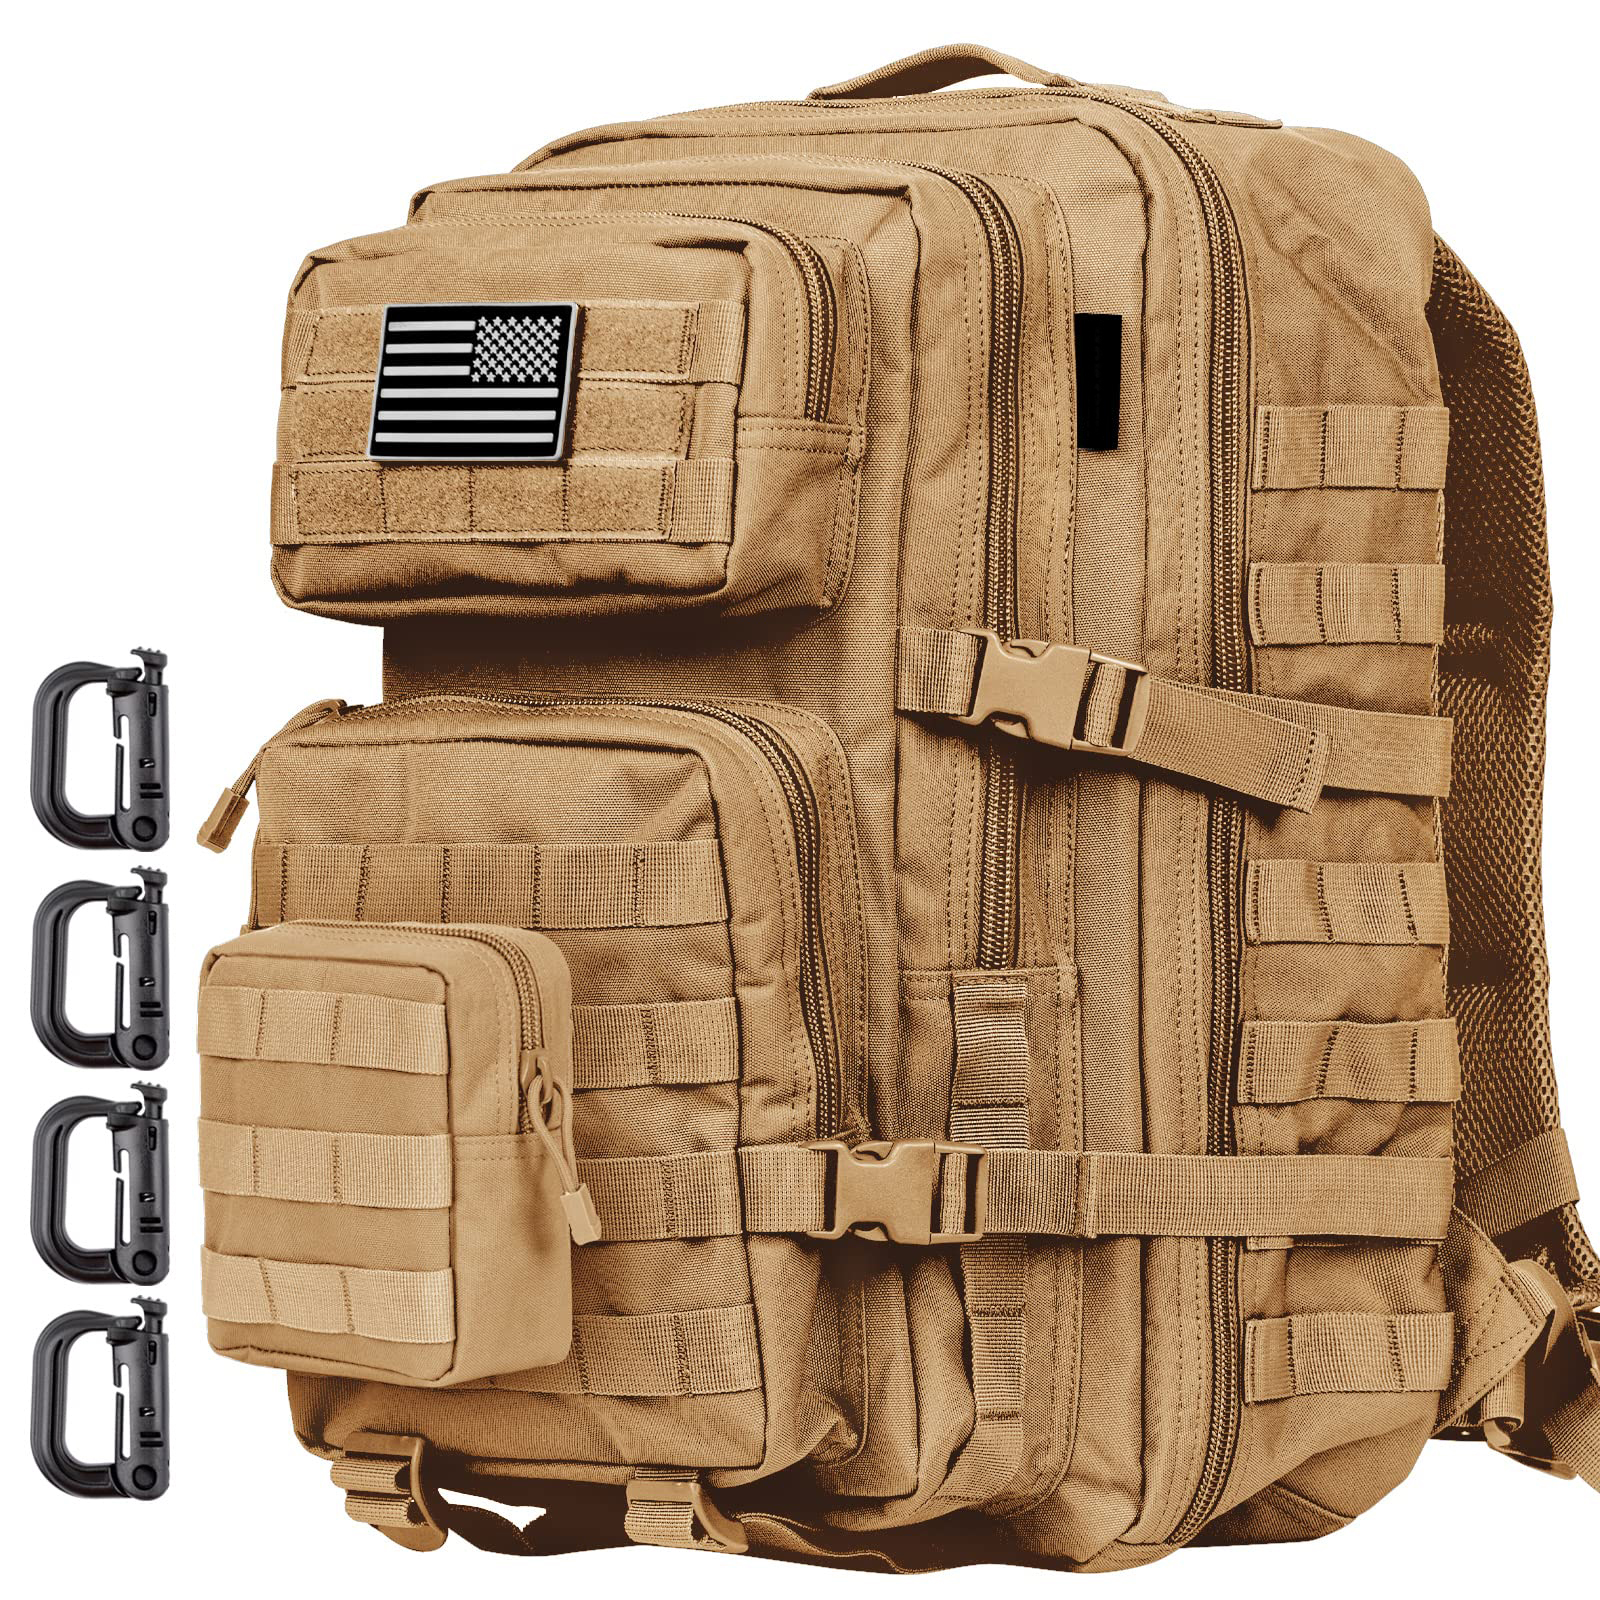 Best Tactical Backpack - Sog Tactical Backpack Supplier | JUNYUAN Bags